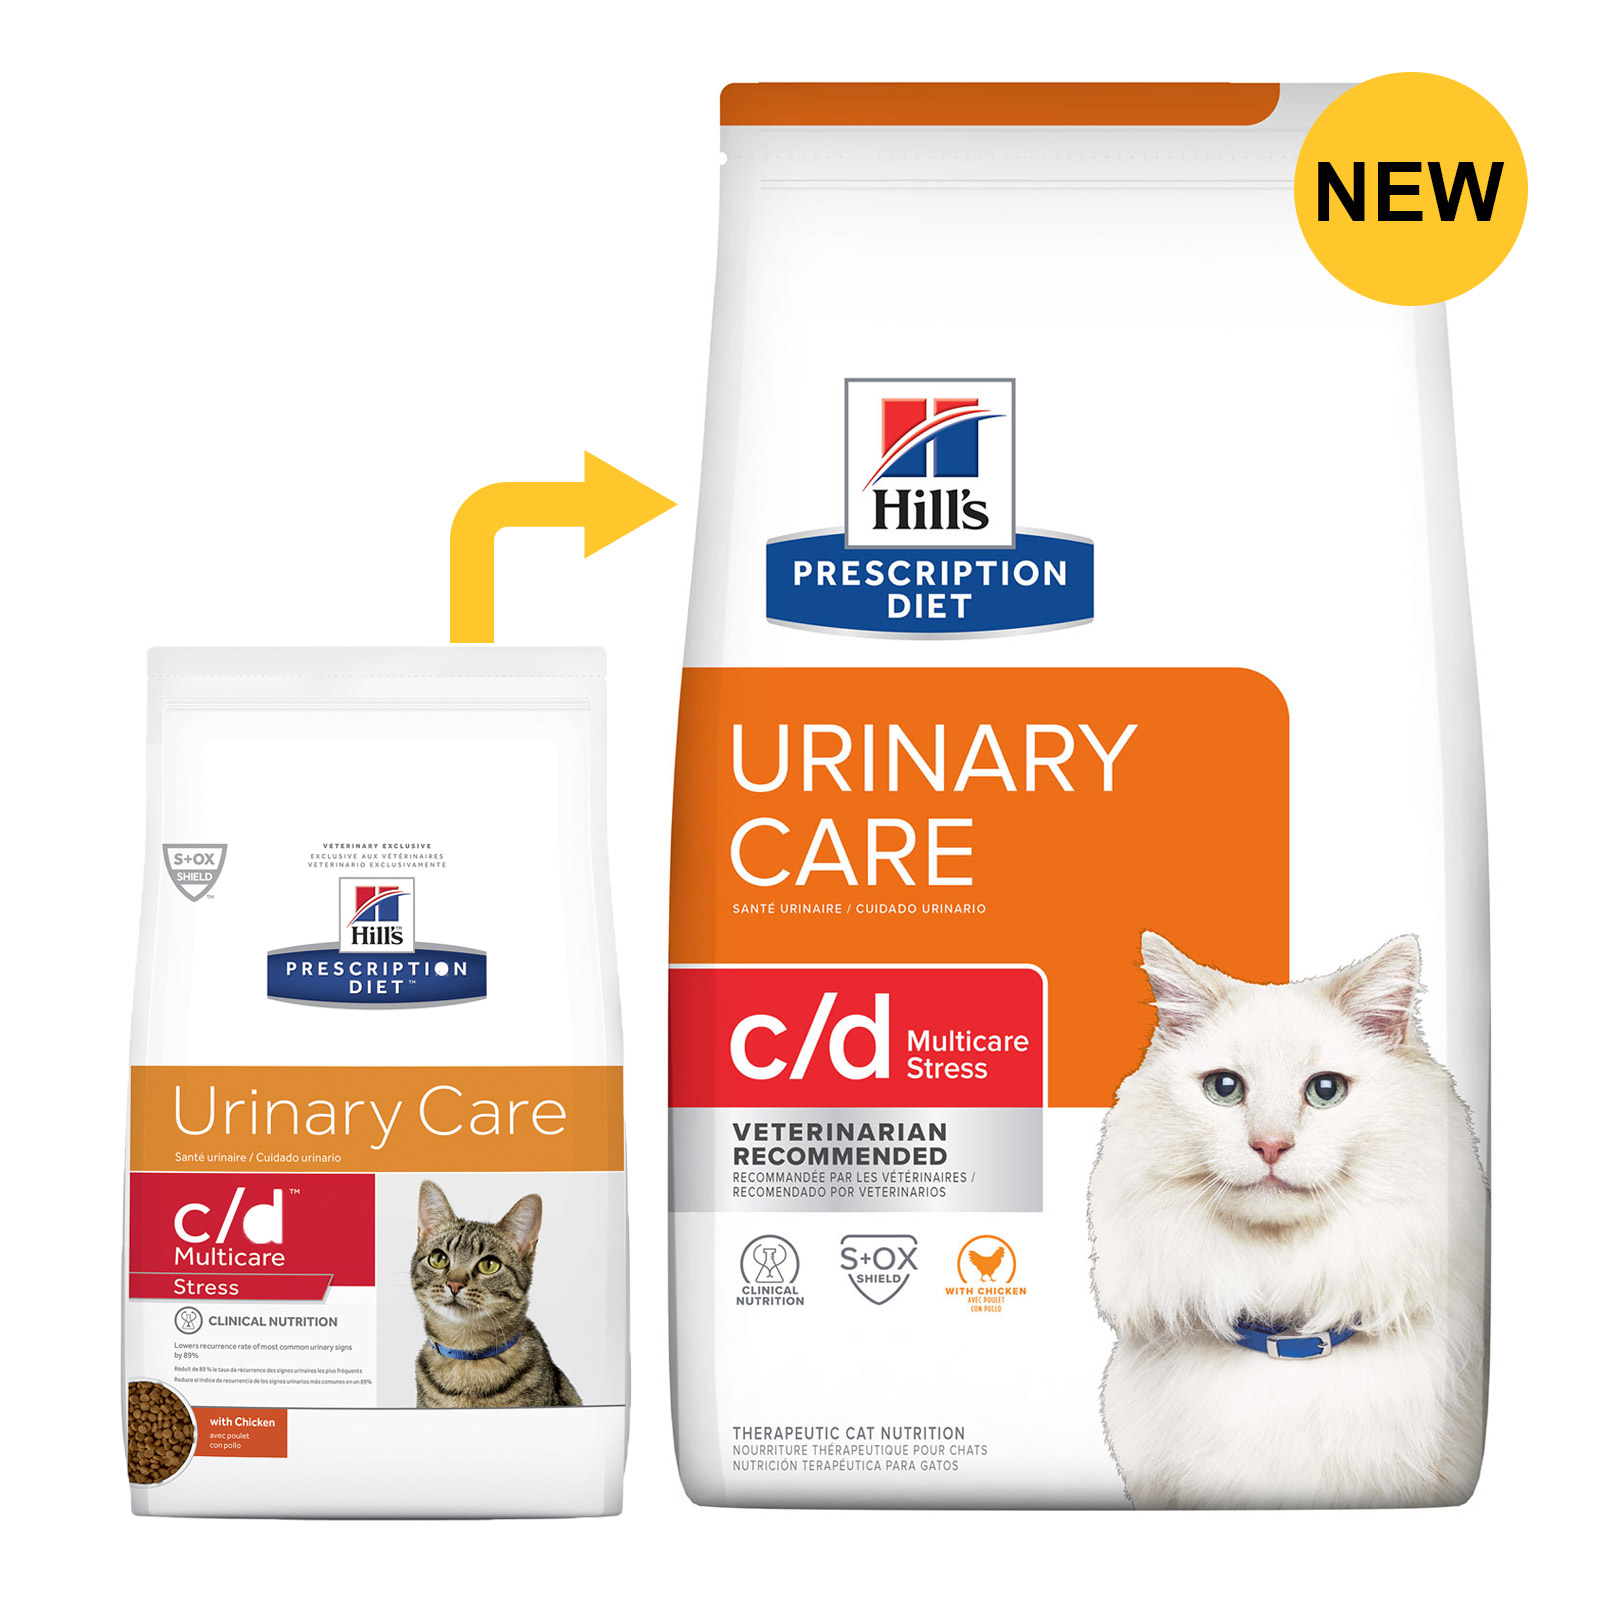 Hill's Prescription Diet c/d Multicare Feline Stress Urinary Care Dry for Food